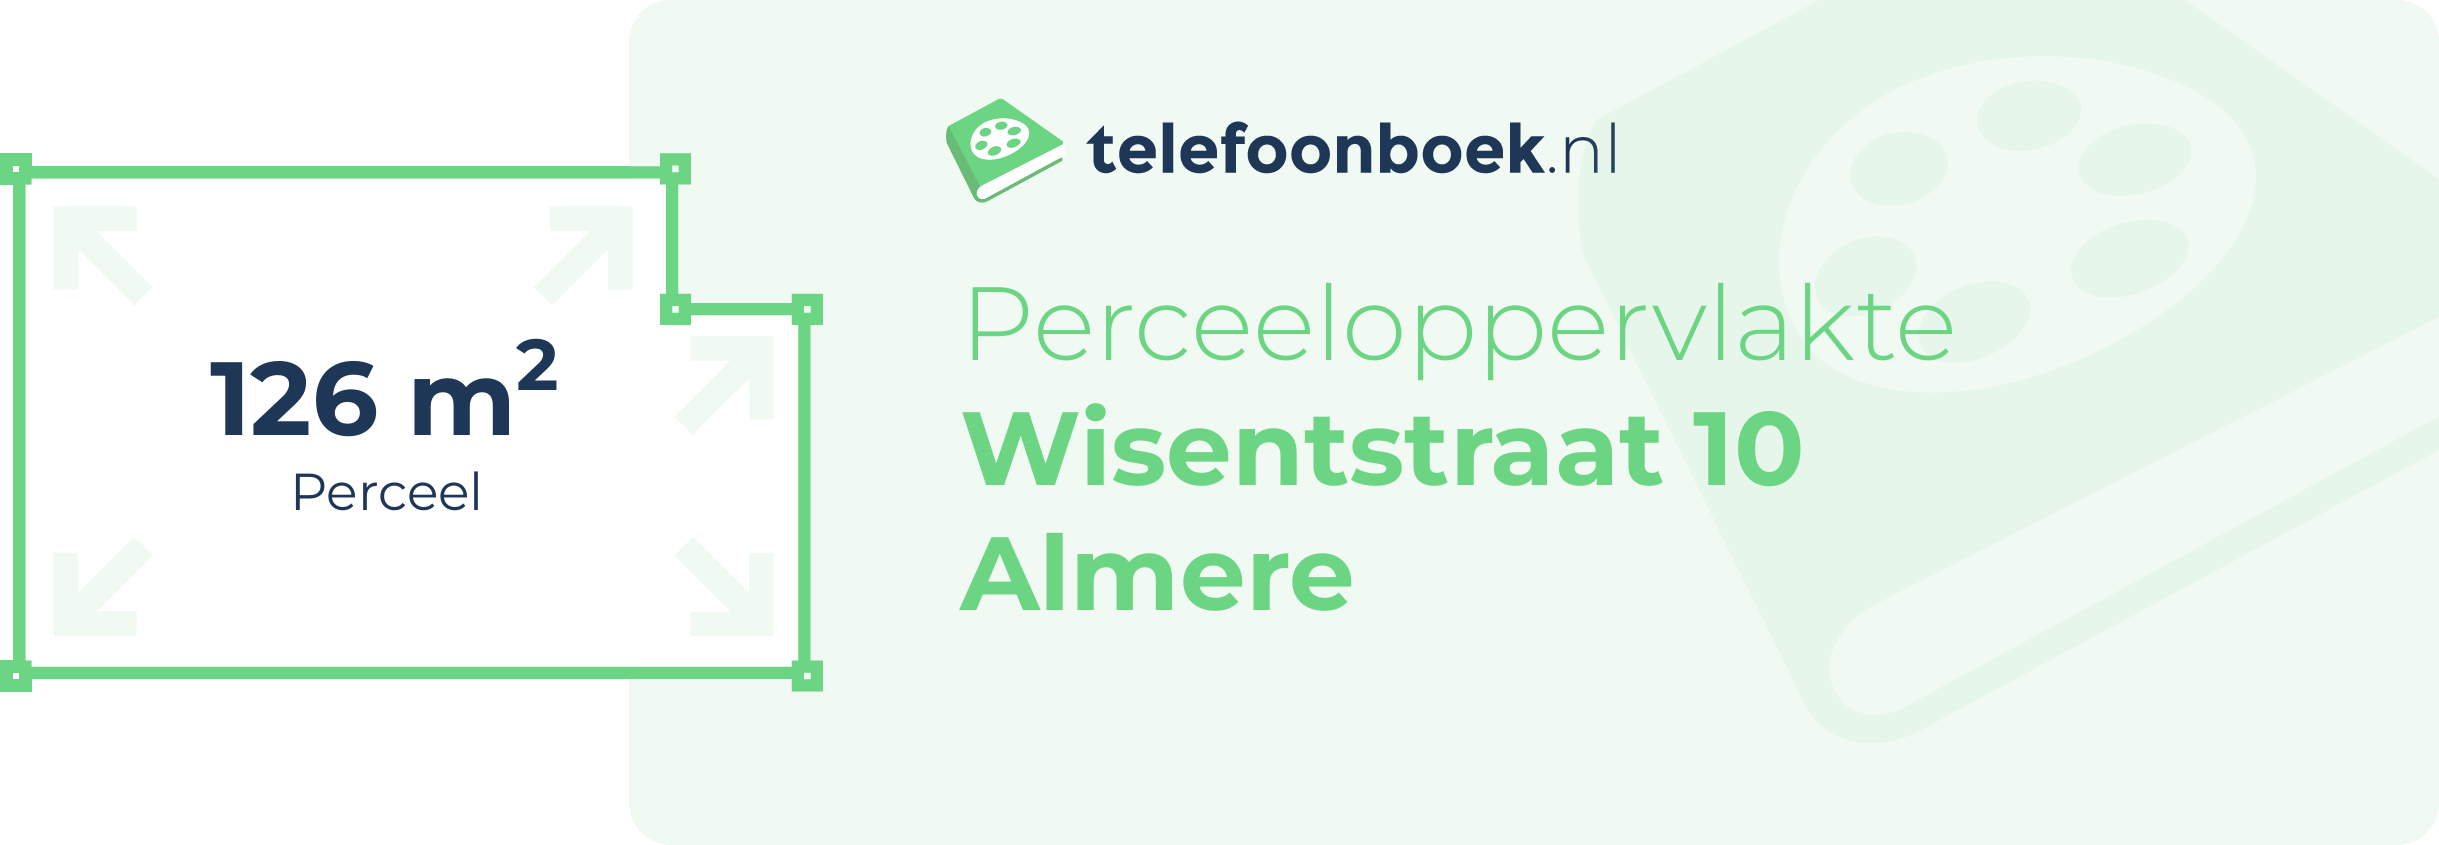 Perceeloppervlakte Wisentstraat 10 Almere